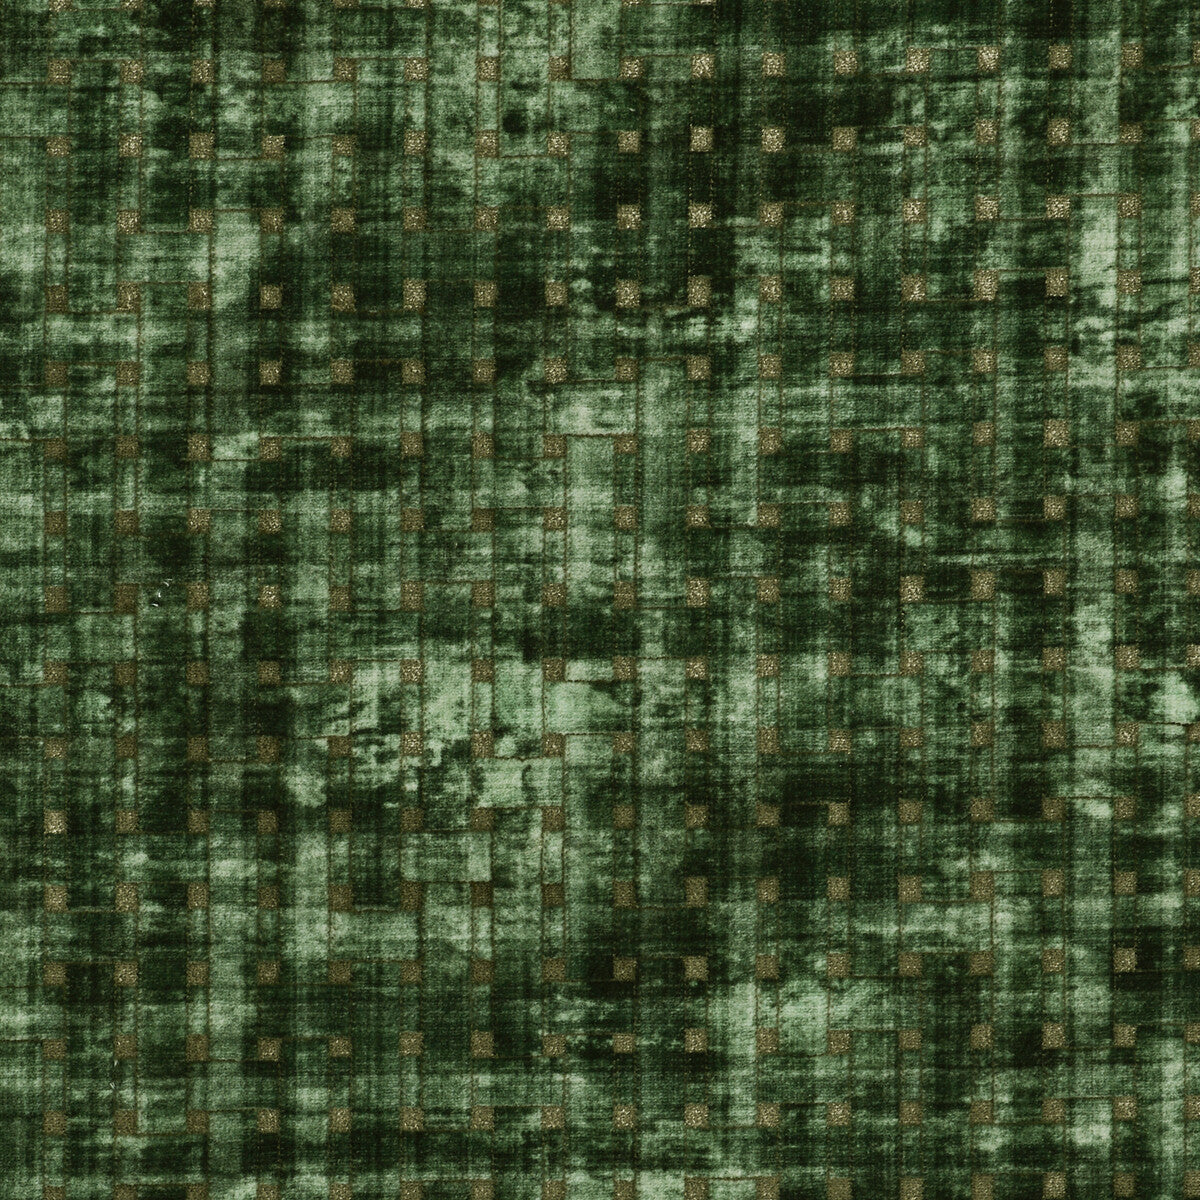 Genaro fabric in verde color - pattern LCT1016.004.0 - by Gaston y Daniela in the Lorenzo Castillo V collection